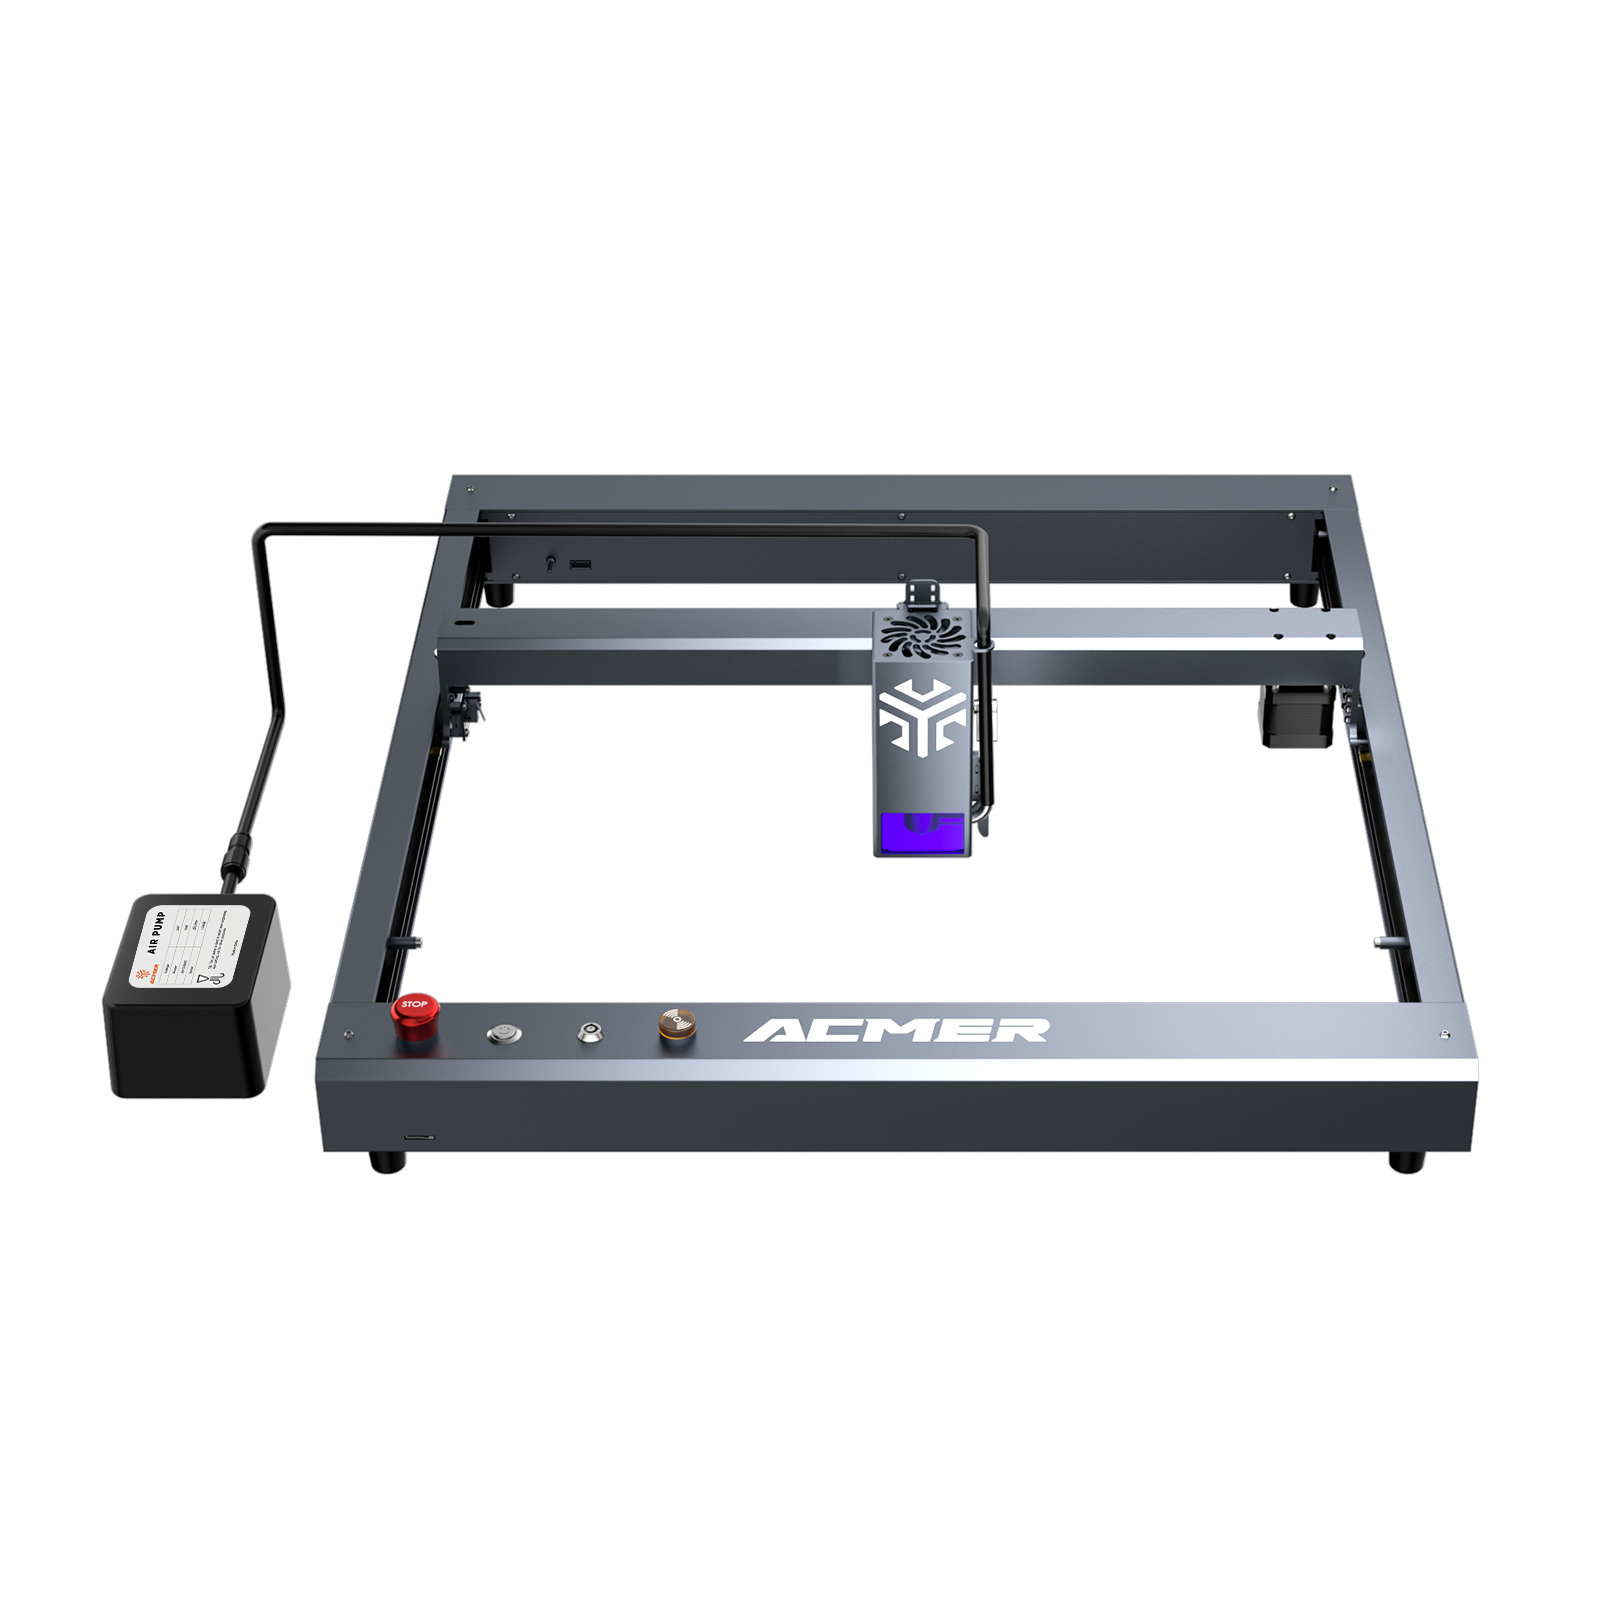 Support for ACMER P2 laser engraver